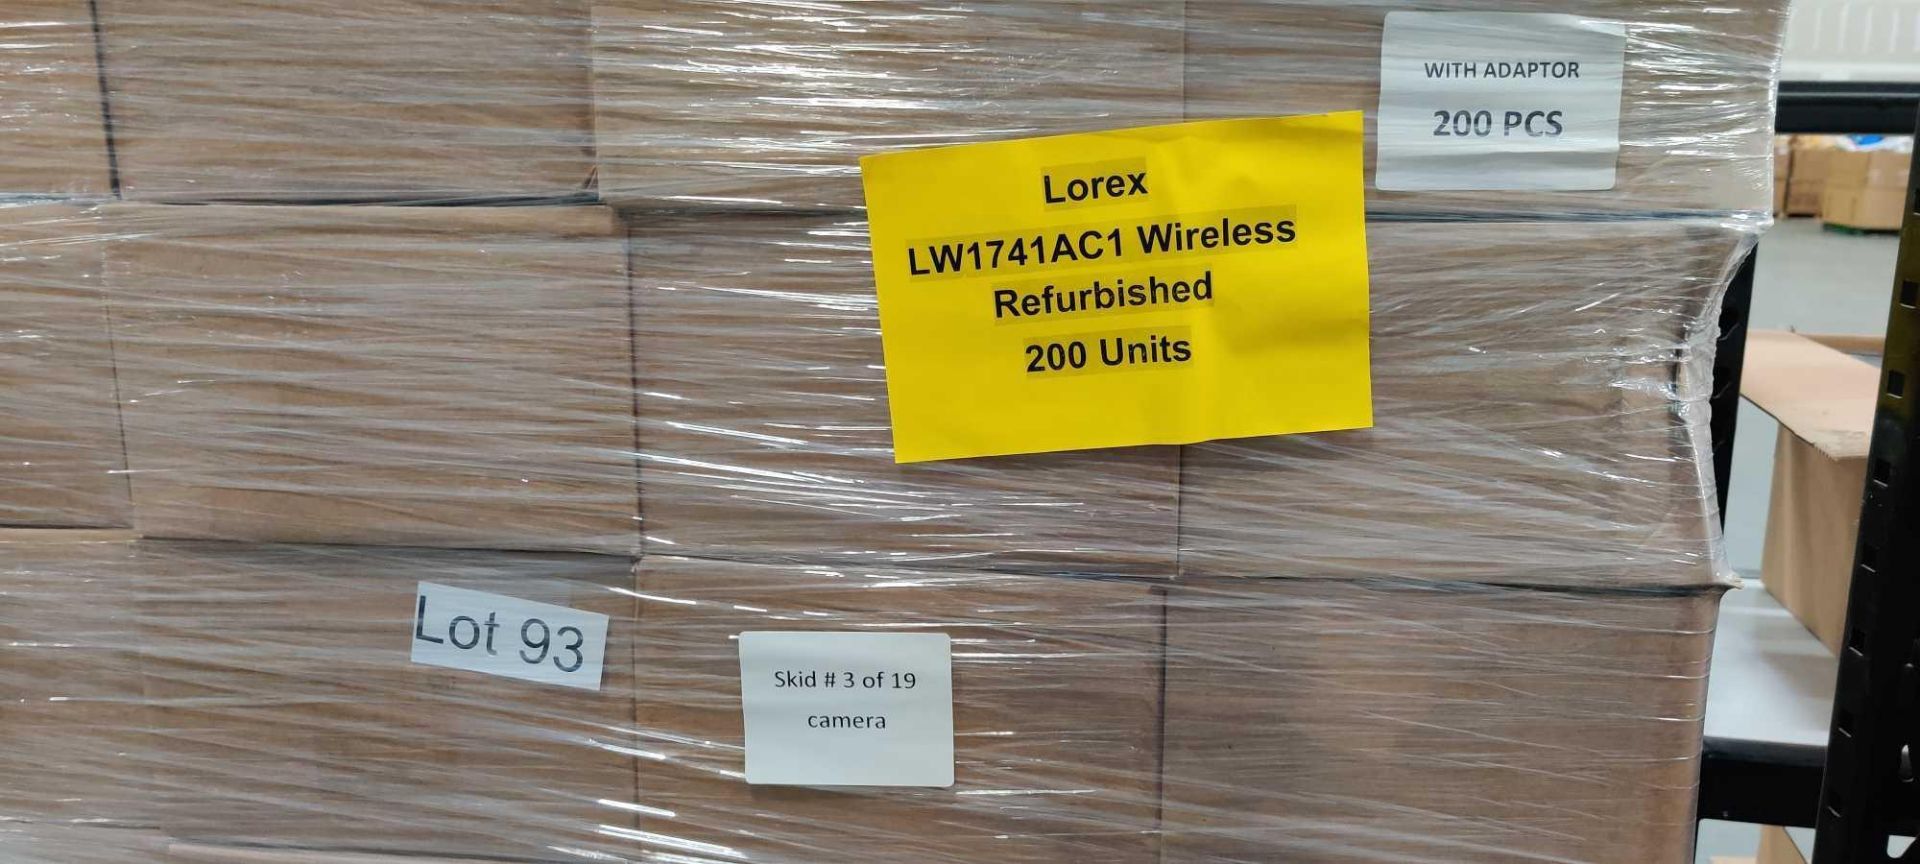 (1) Pallet - Lorex LW1731AC1 Wireless Refurbished approx. 200 Units - Image 2 of 3